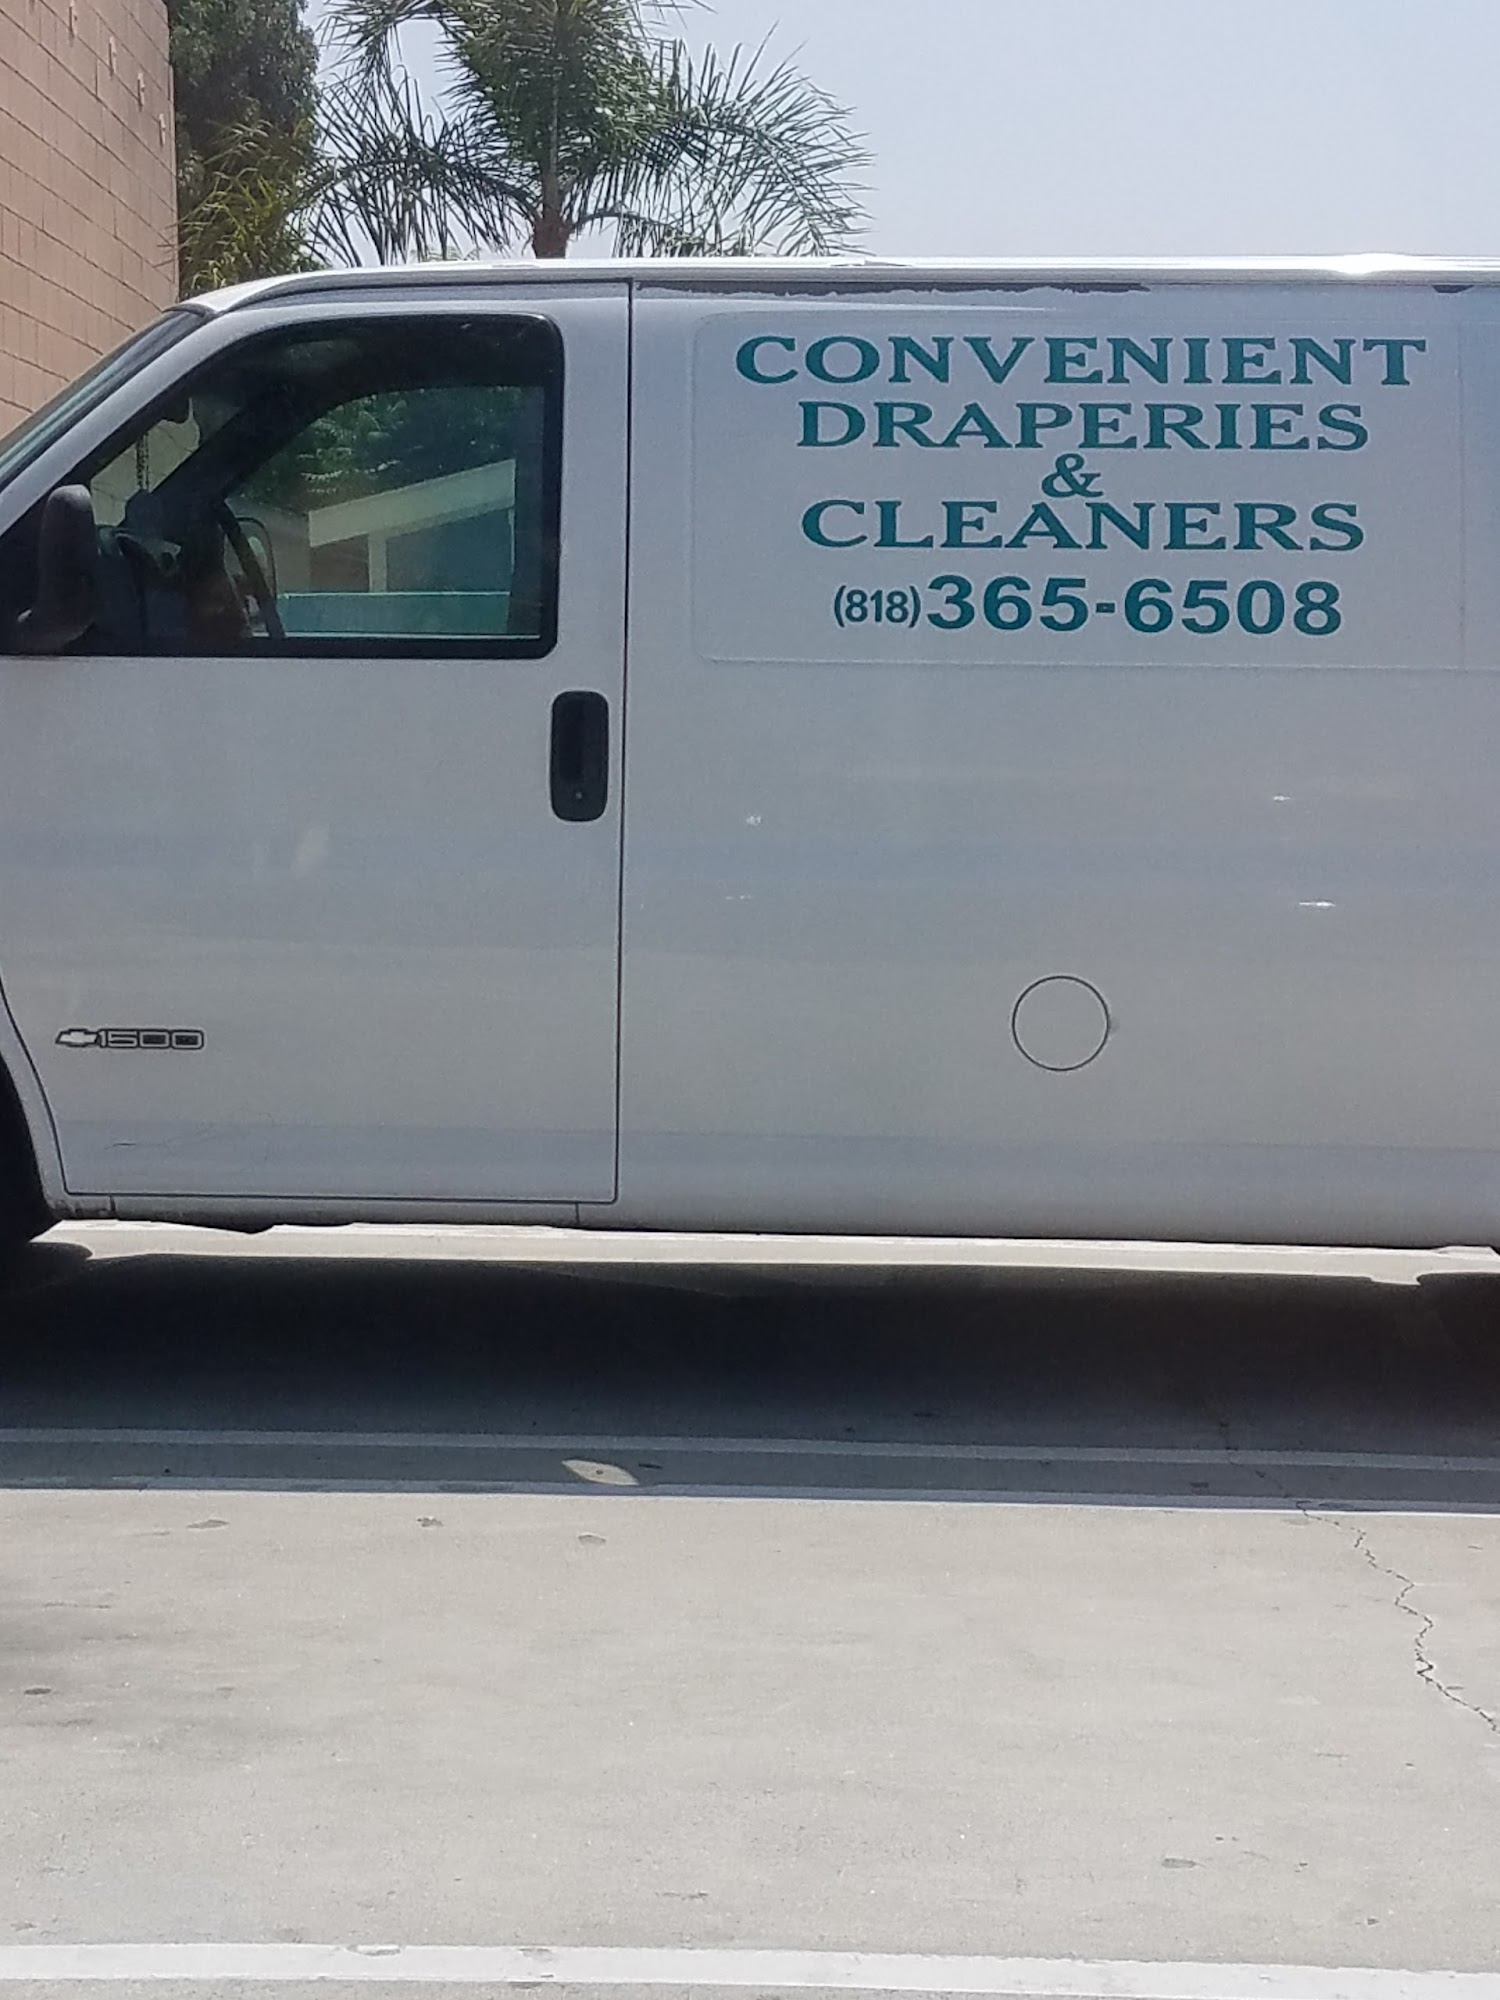 Convenient Draperies & Cleaner